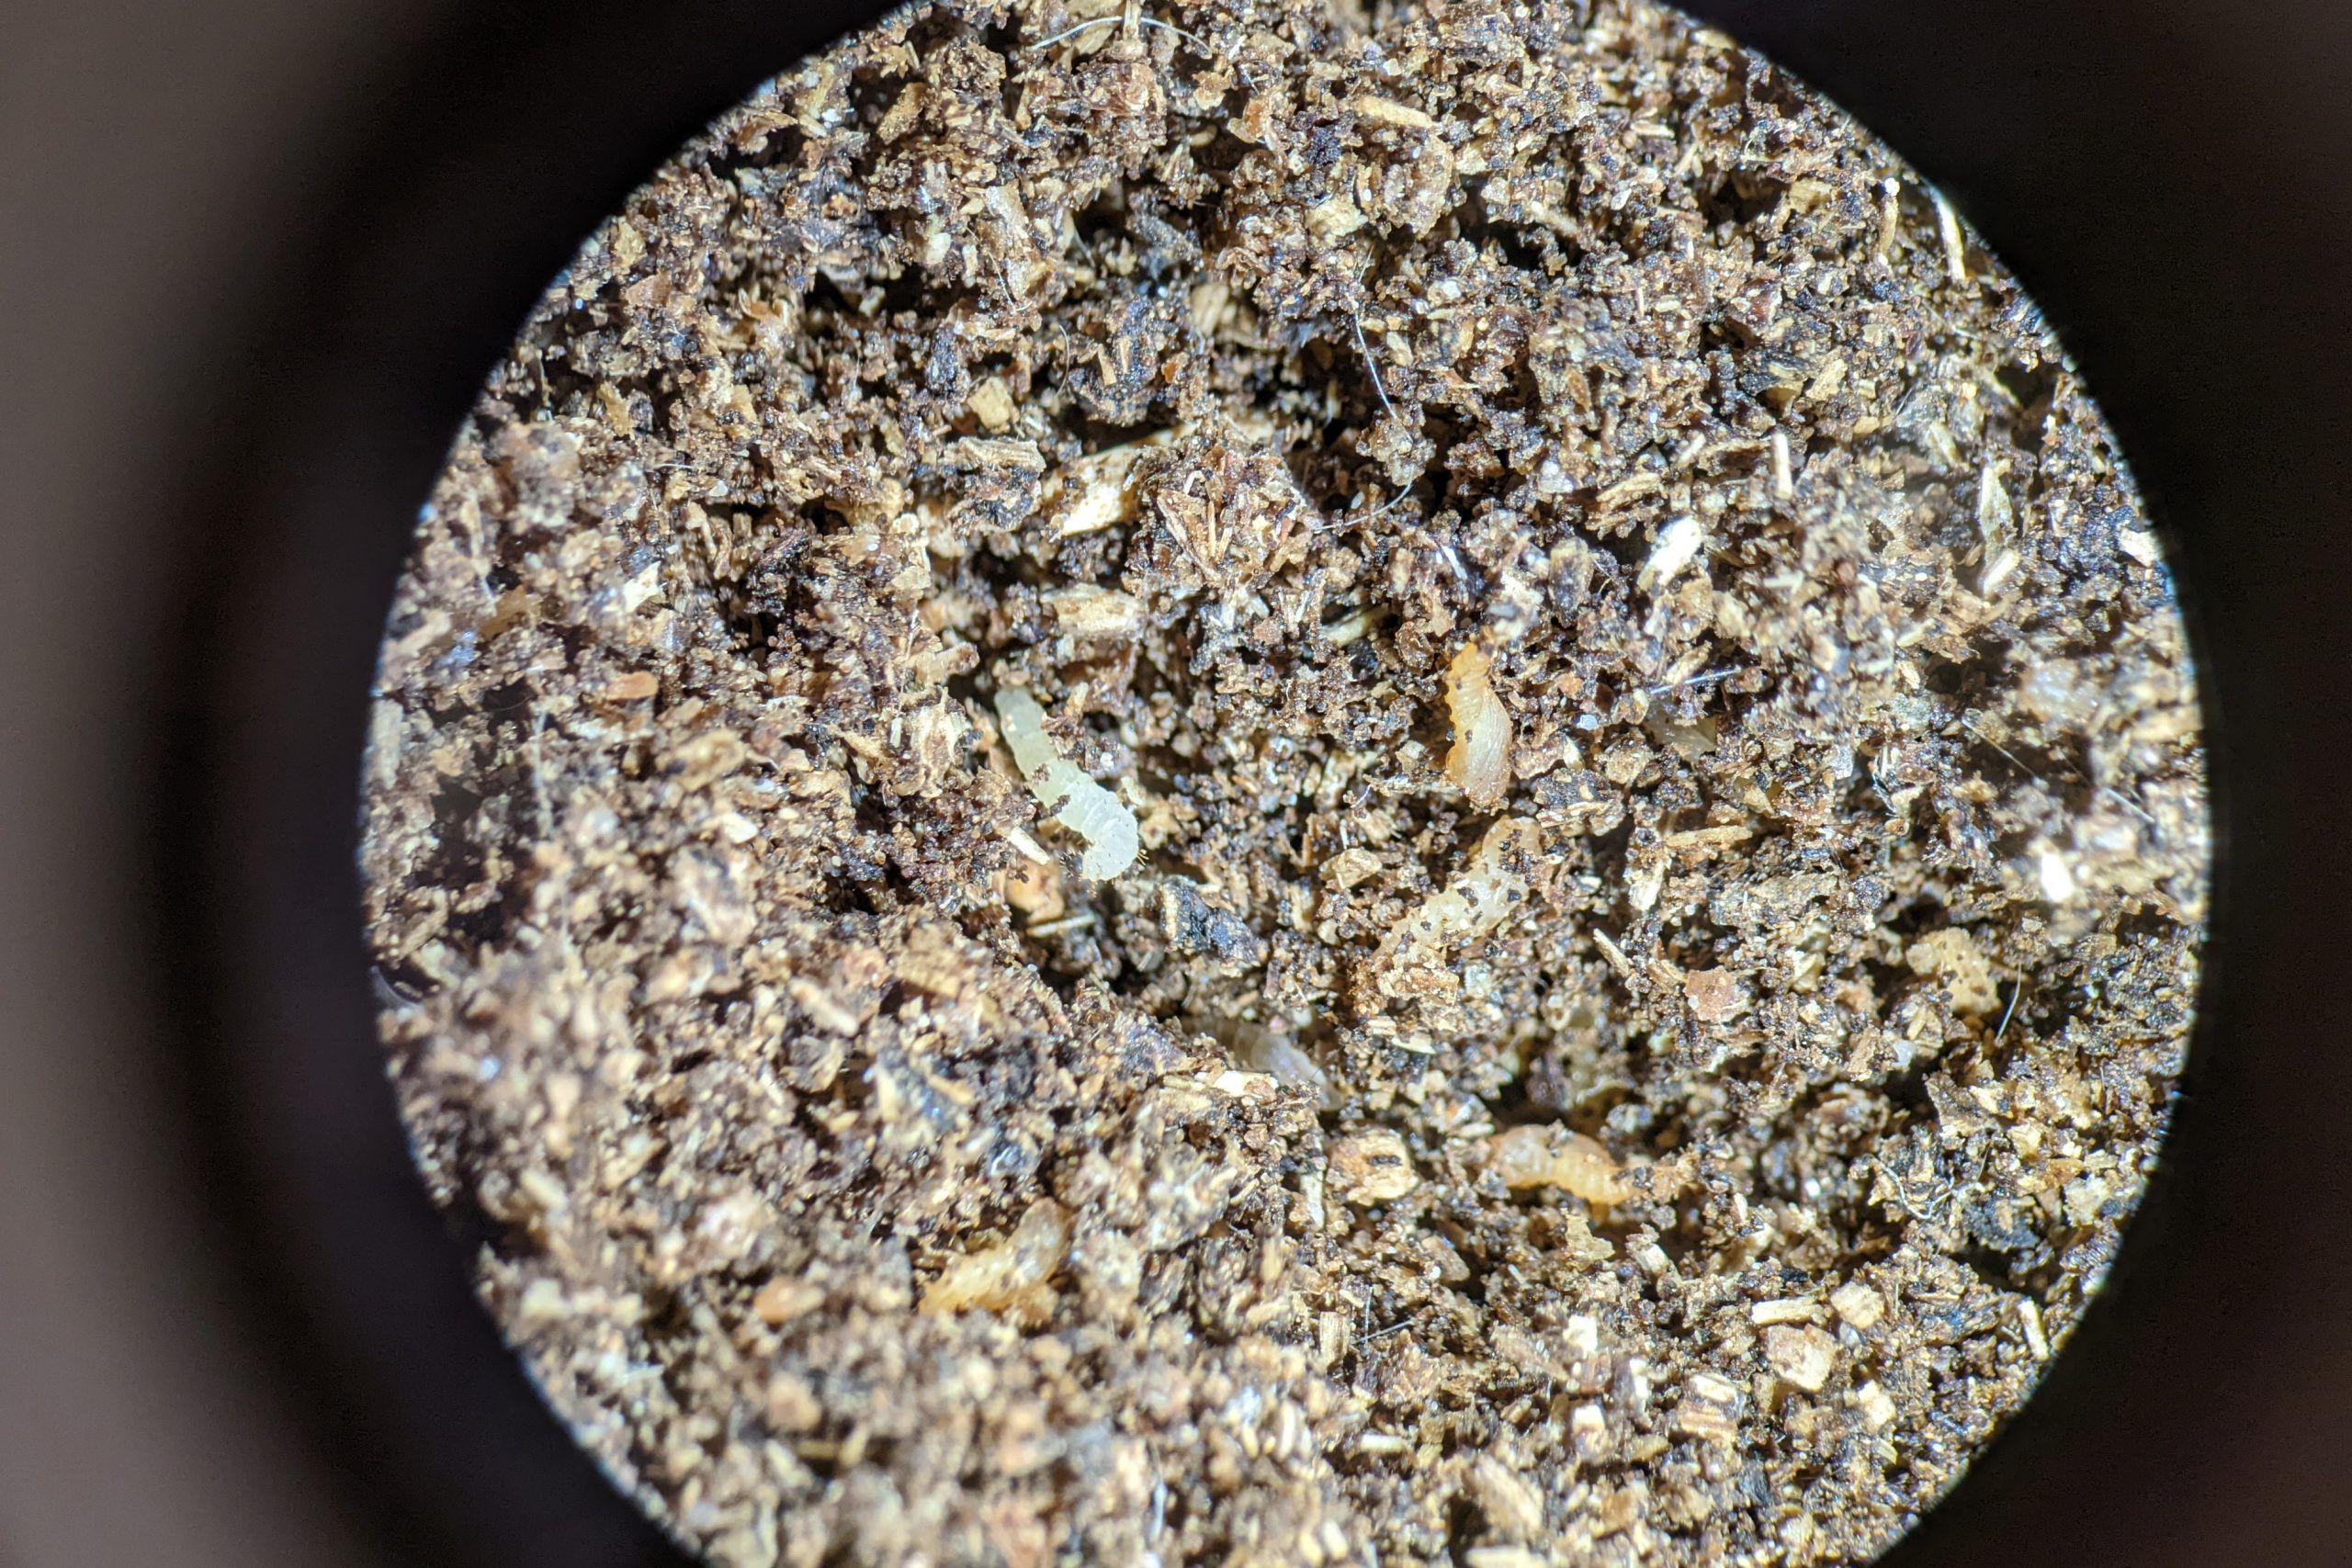 Microscopic image if sand flies